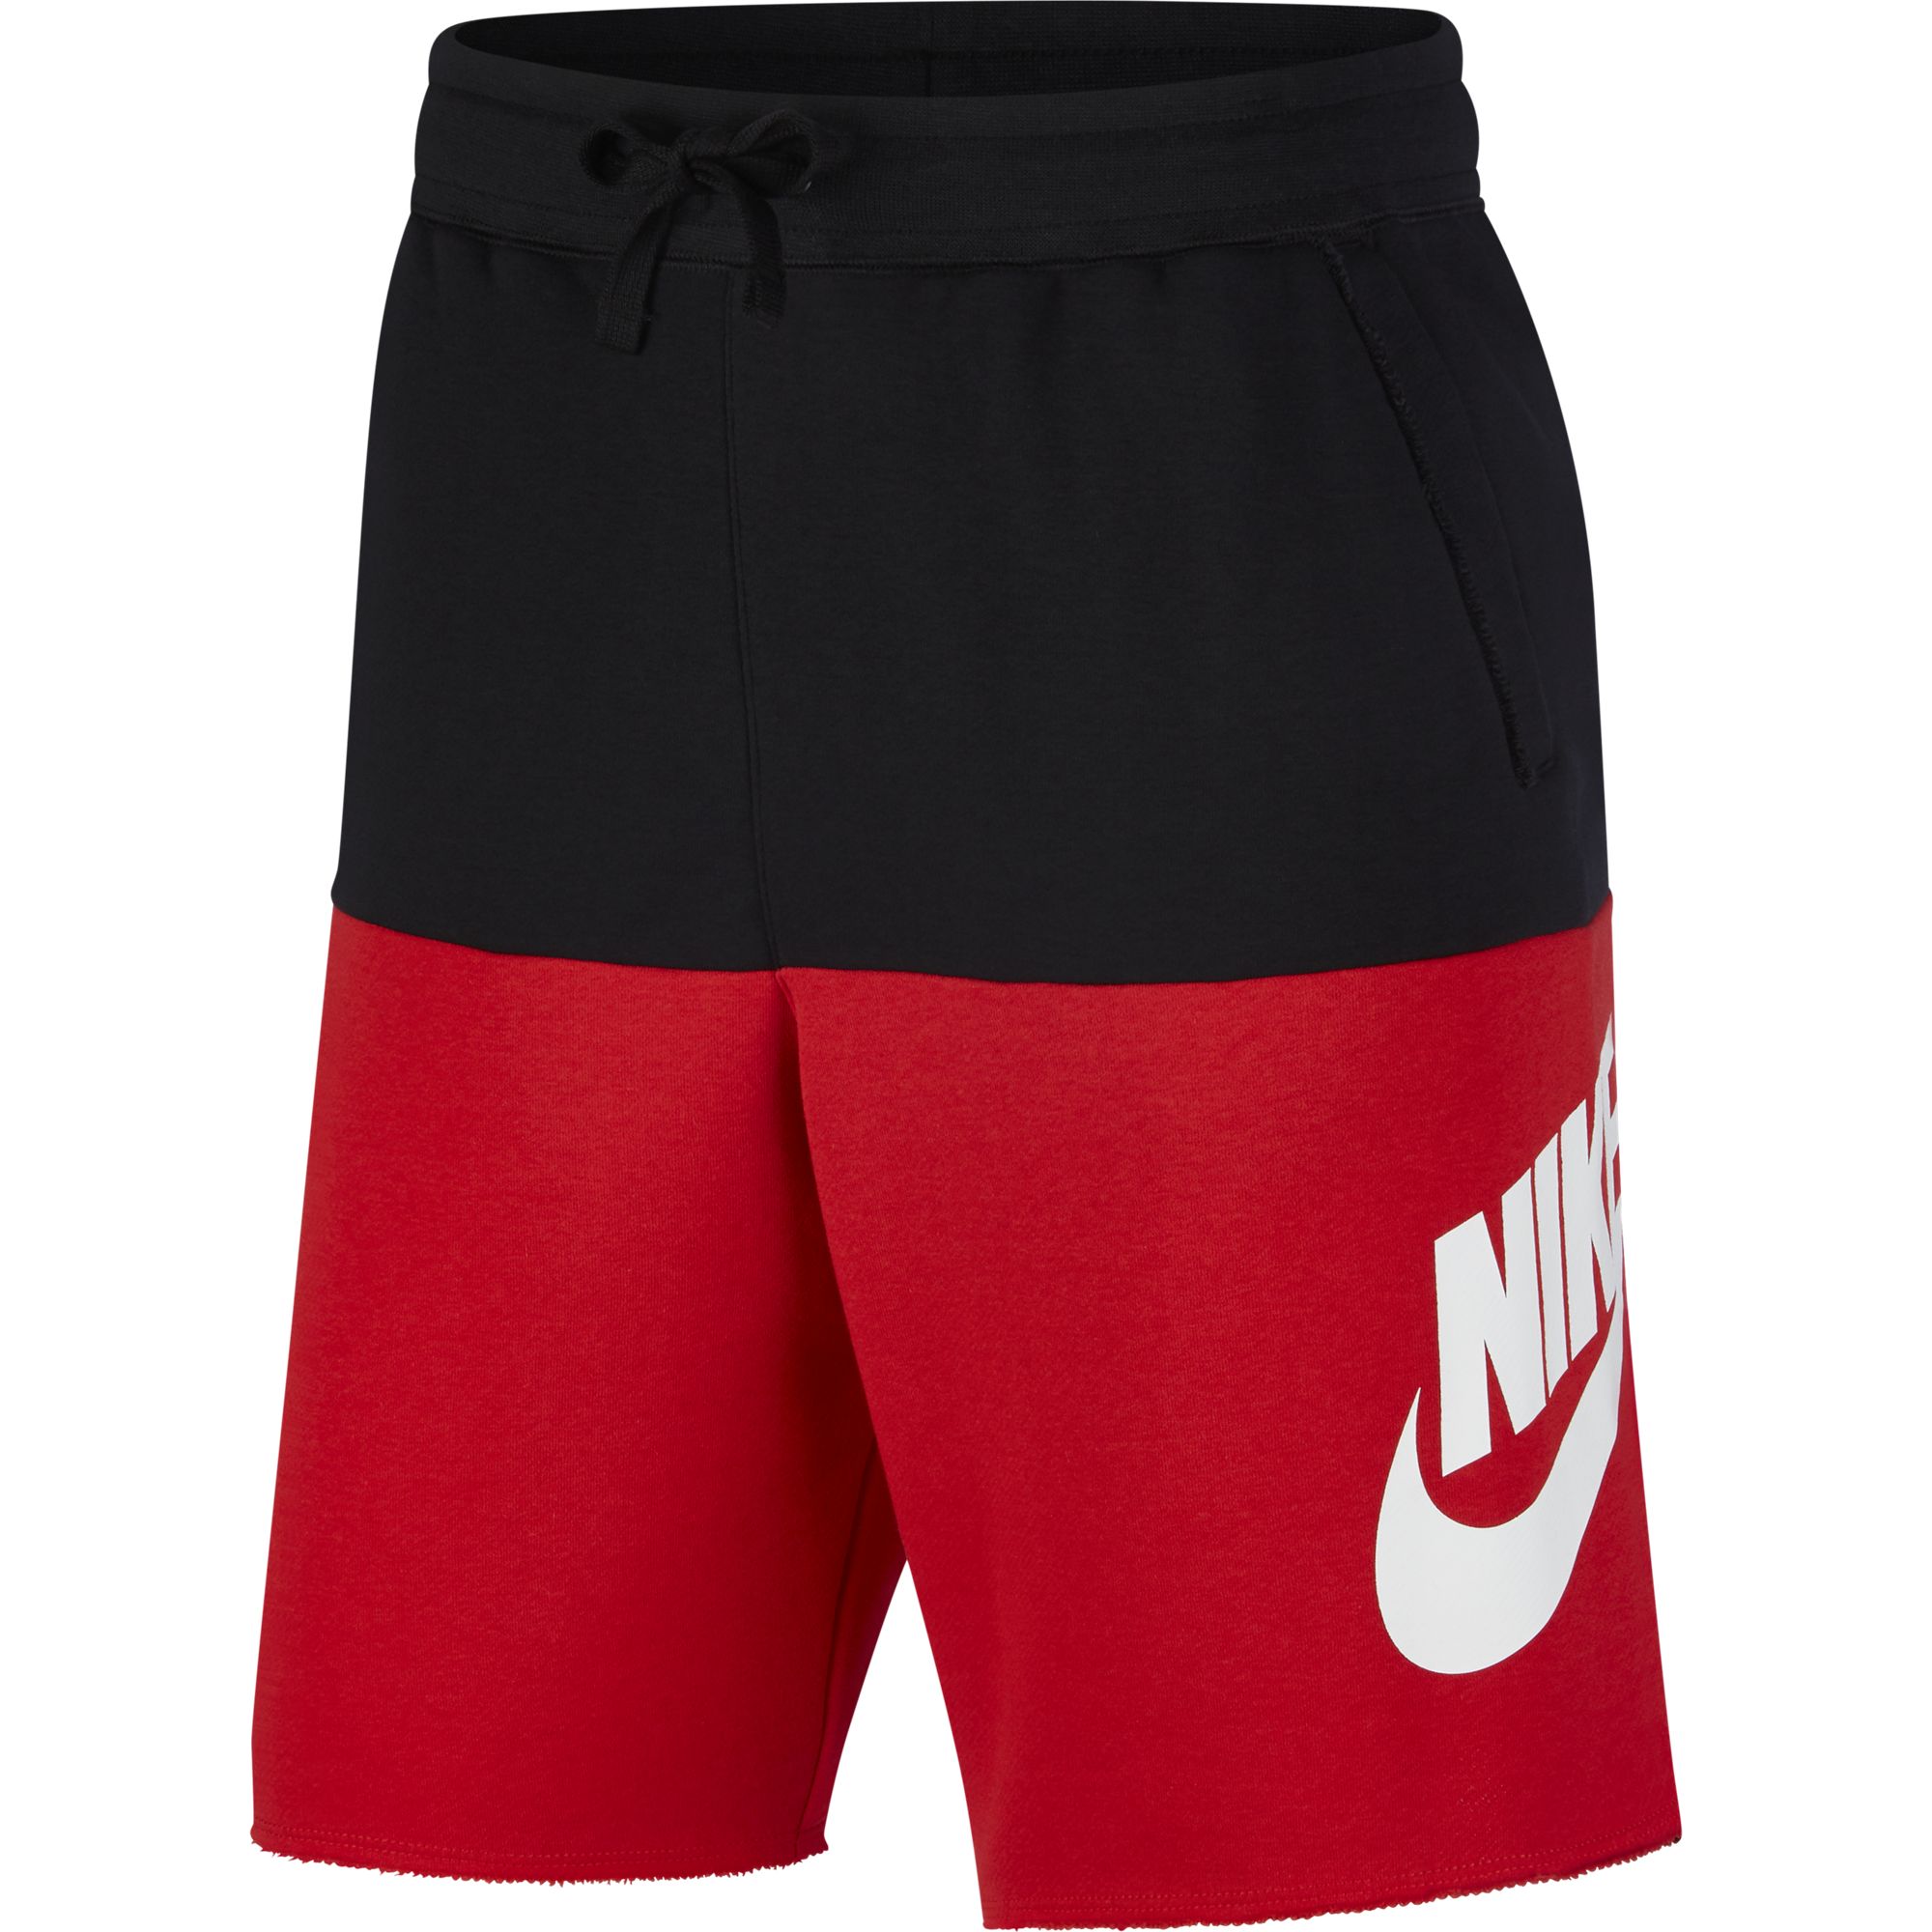 Le short. Шорты Nike Color Block. Шорты Nike Sportswear черные с красным. Nike World Tour шорты. Этикетка на шортах найк.